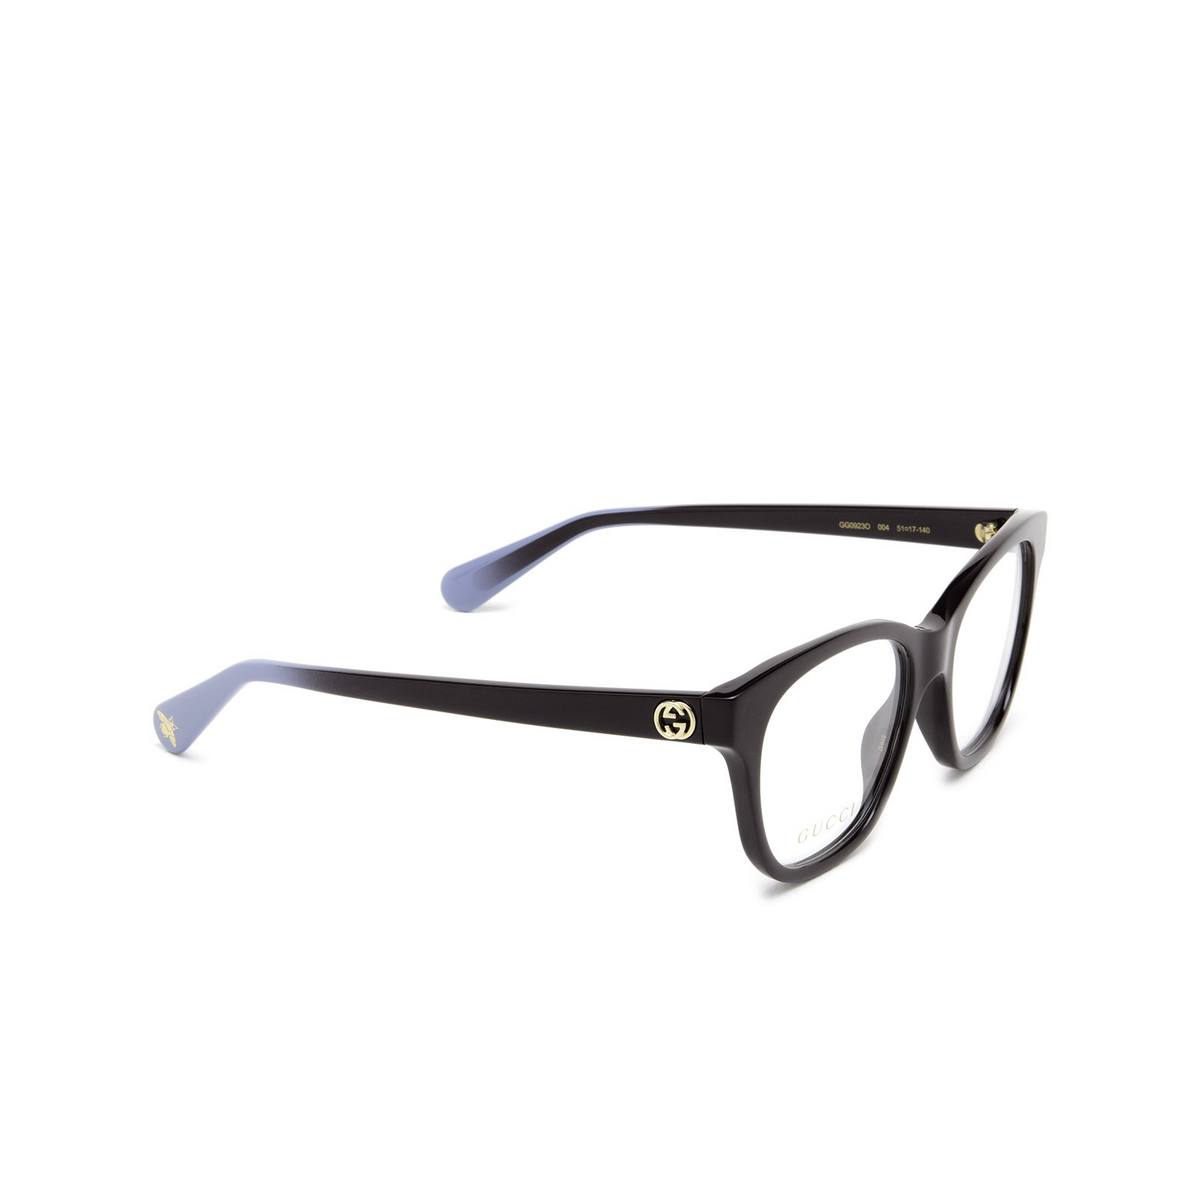 Gucci® Square Eyeglasses: GG0923O color Brown 004 - three-quarters view.